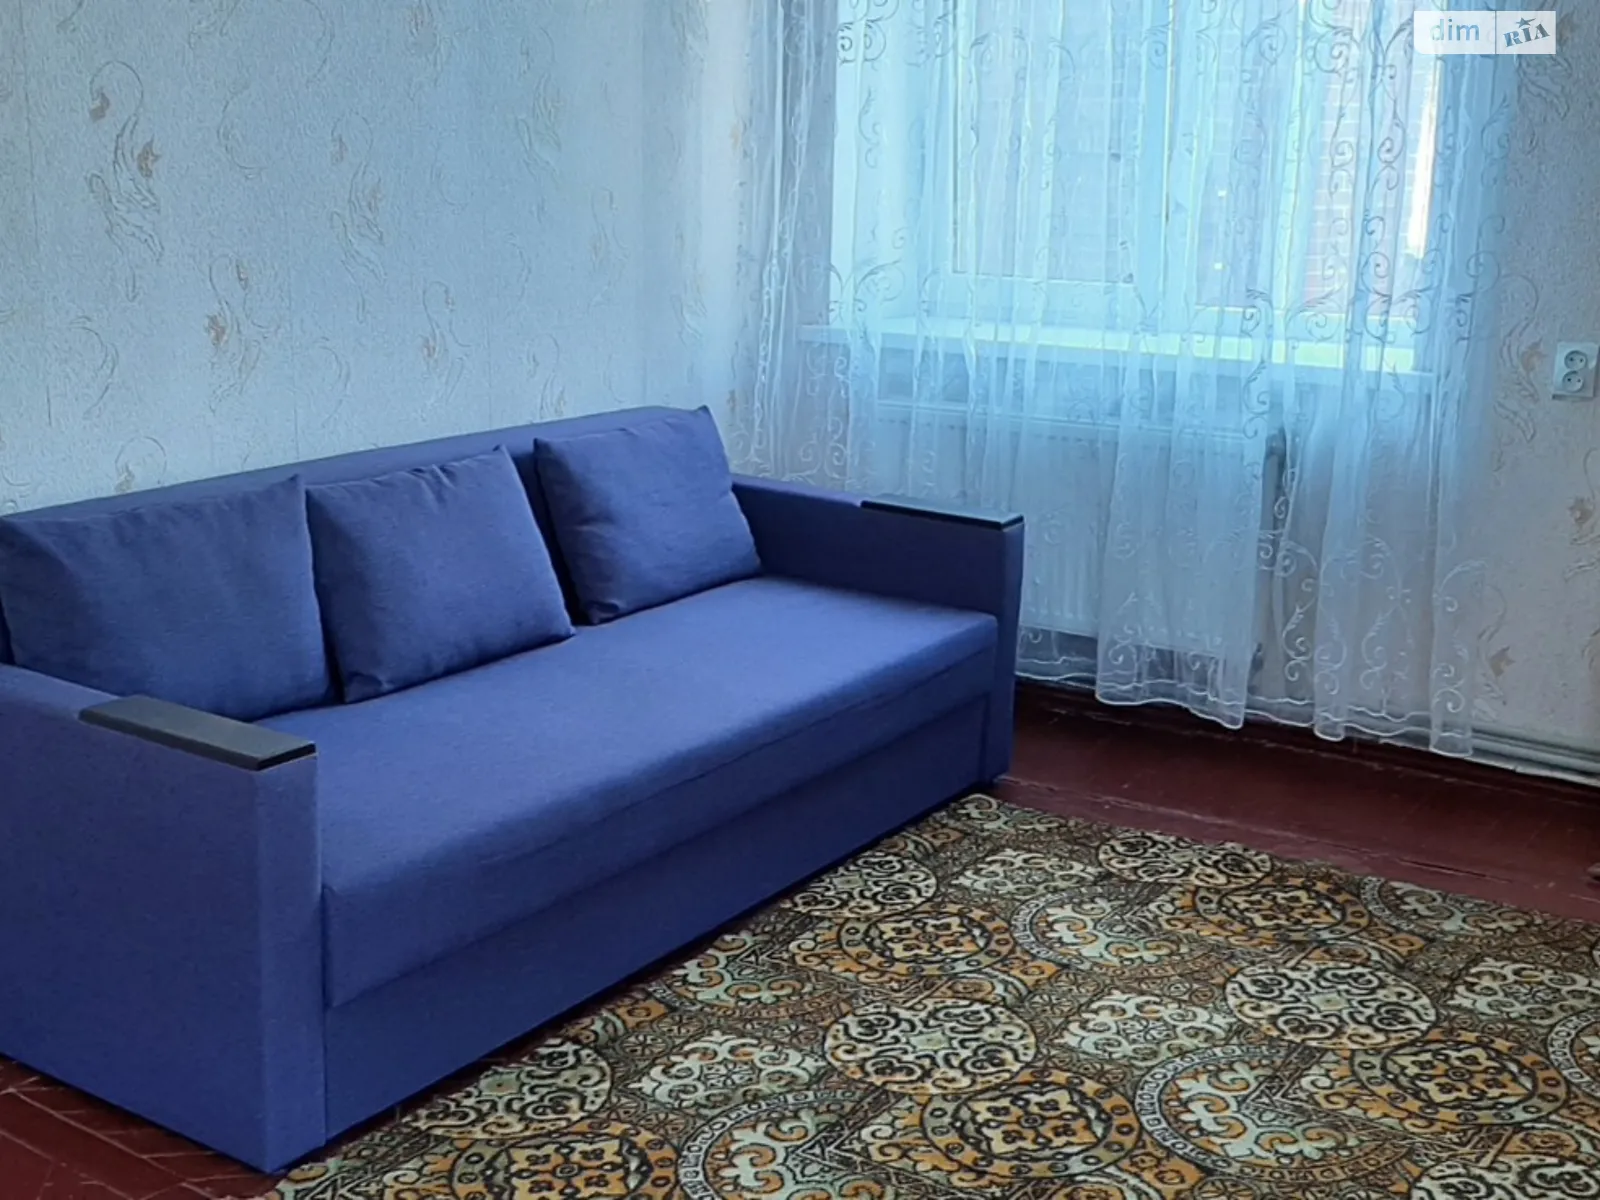 Сдается в аренду комната 35 кв. м в Харькове - фото 3